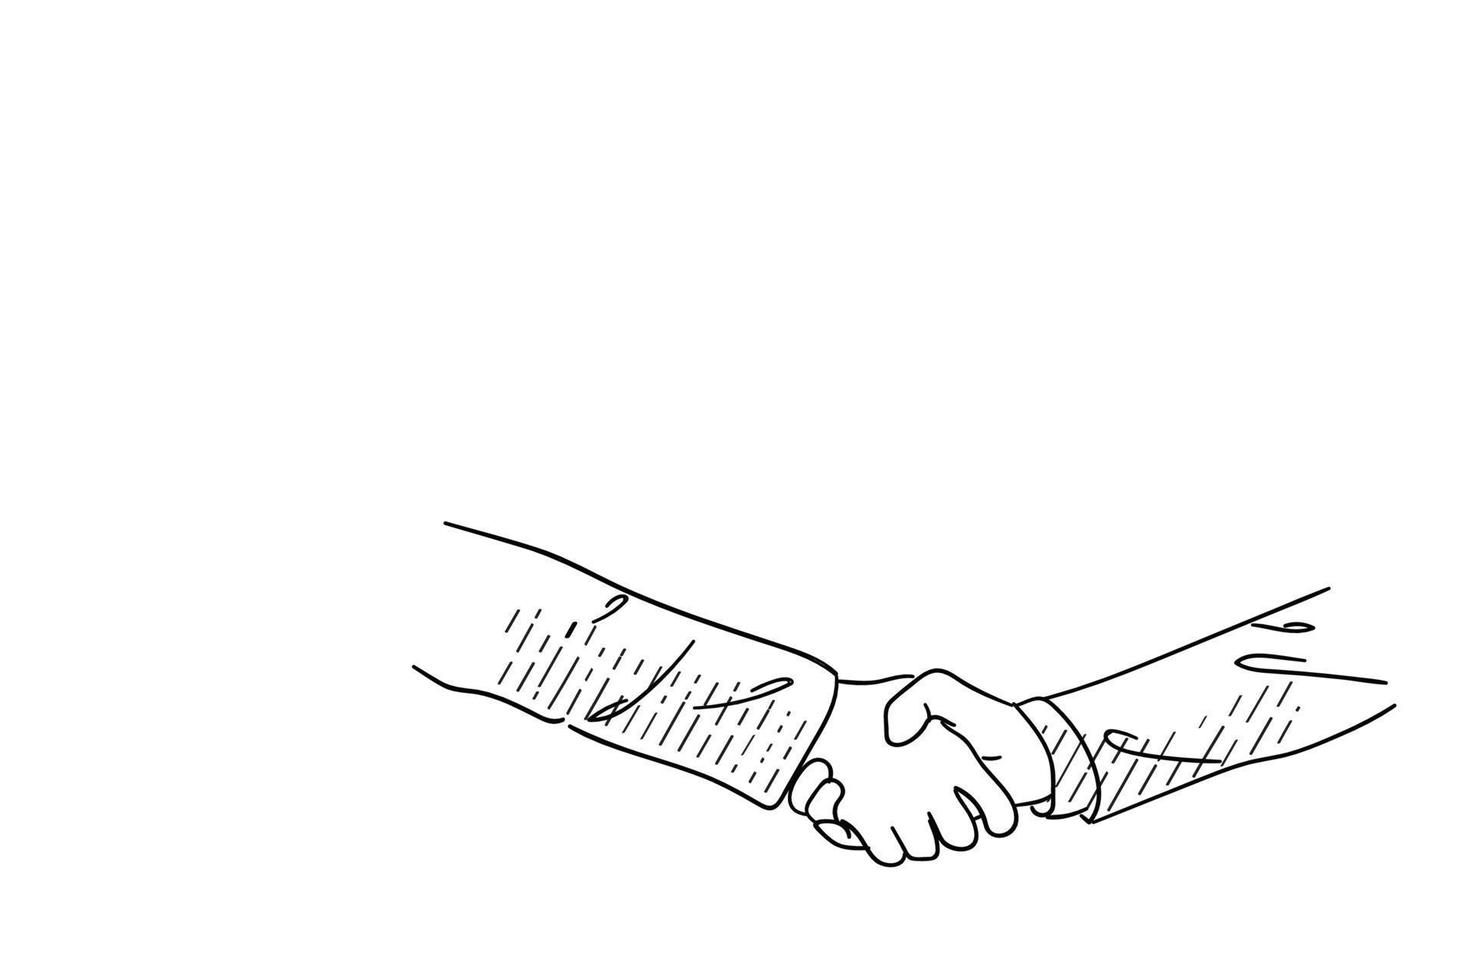 Greeting with handshake. Hand drawn vector illustration design